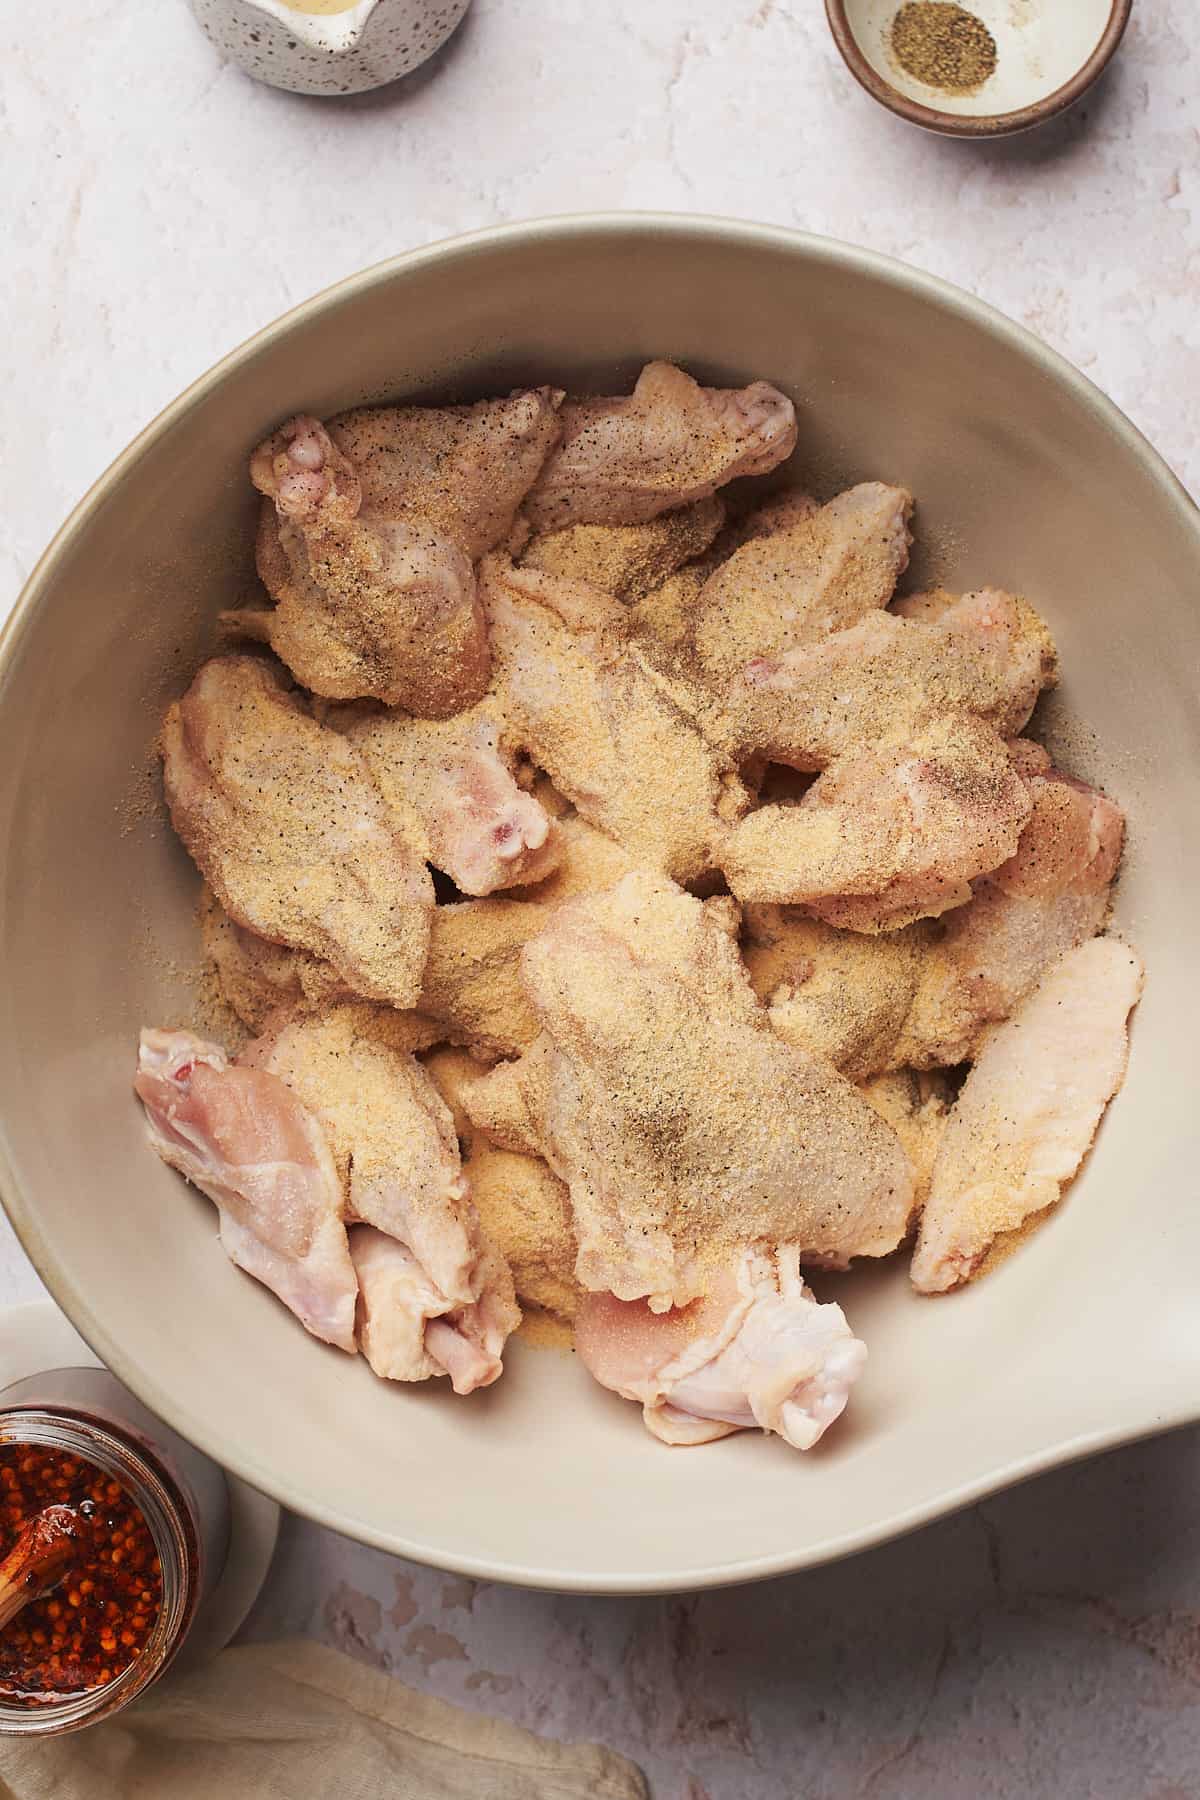 raw chicken wings coated in seasonings in a large bowl. 